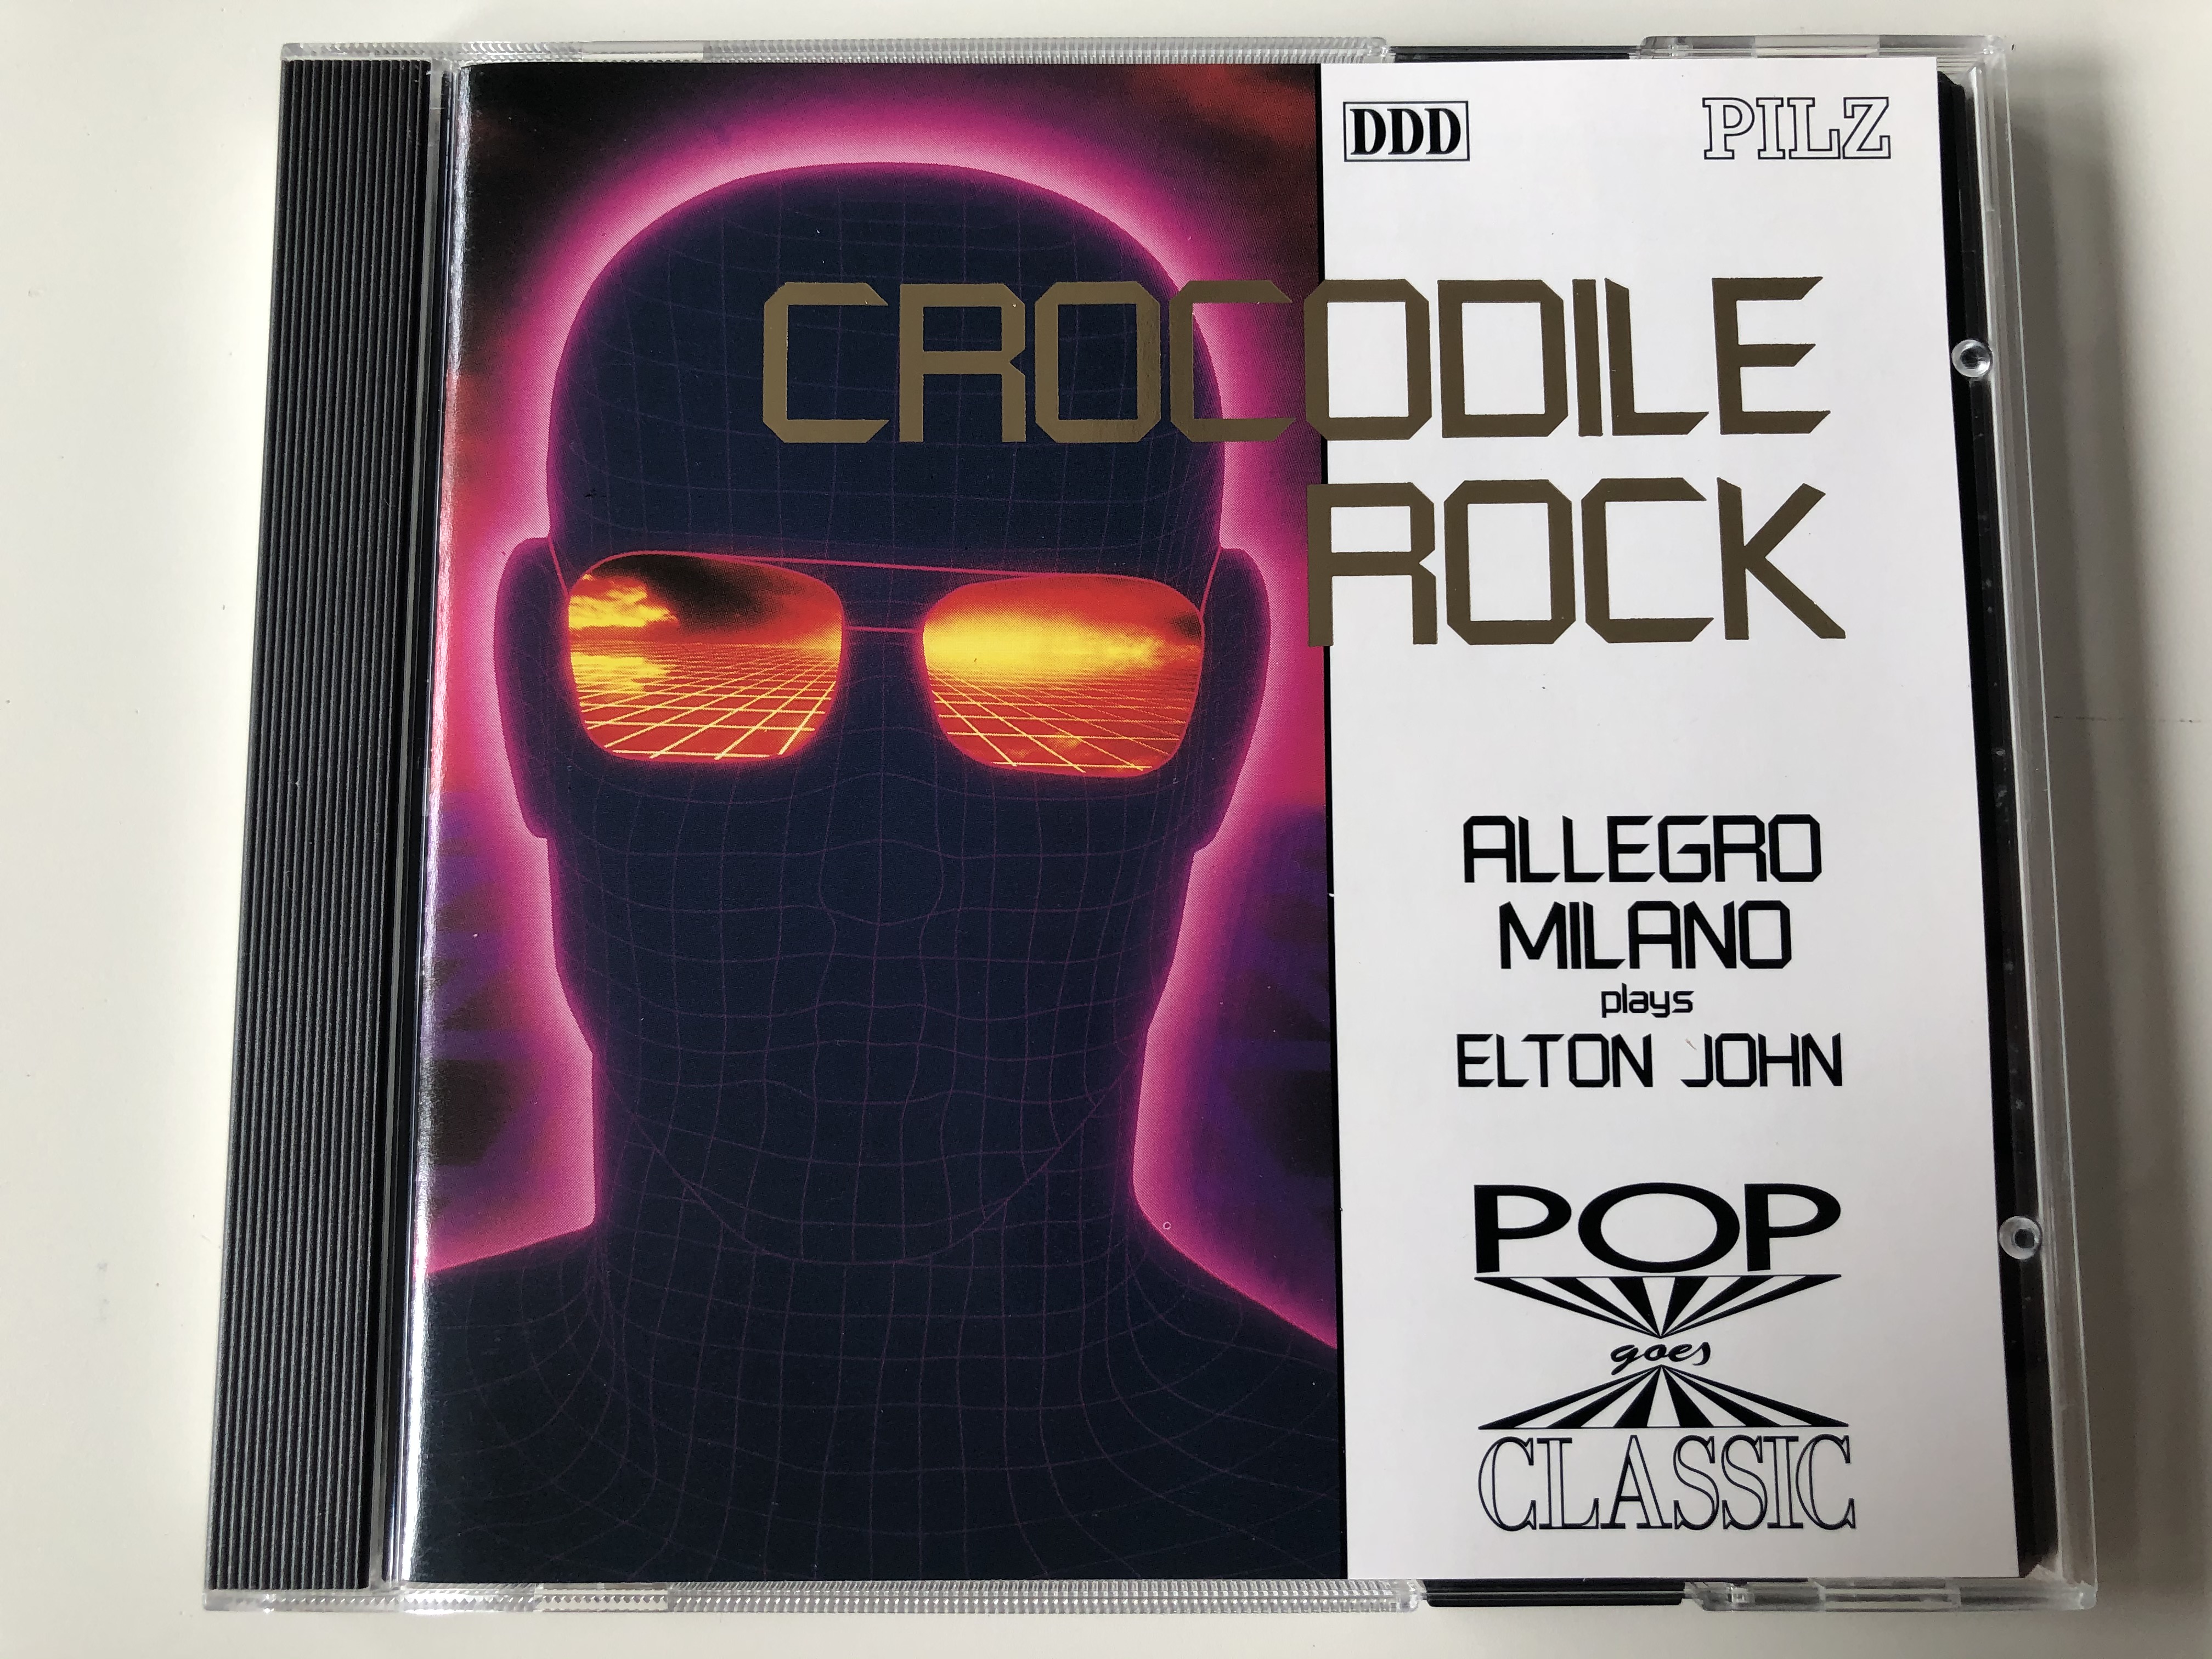 crocodile-rock-allegro-milano-plays-elton-john-pop-goes-classic-pilz-audio-cd-1992-stereo-44-5832-2-1-.jpg